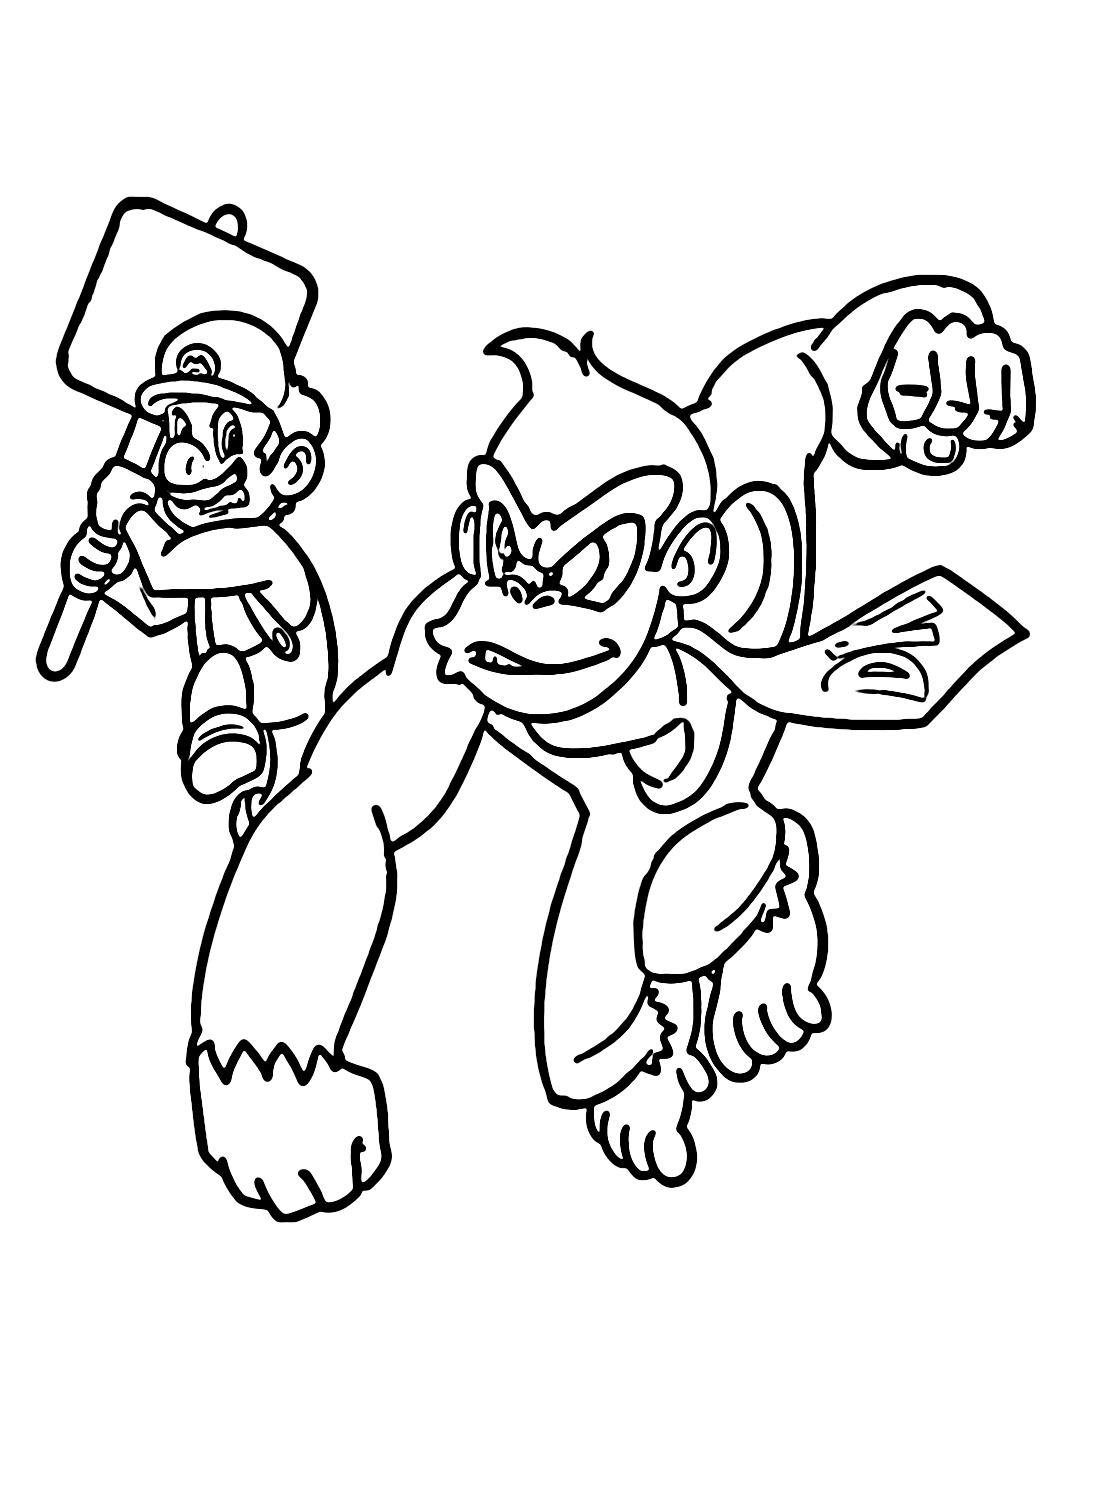 Mario Vs Donkey Kong de Donkey Kong